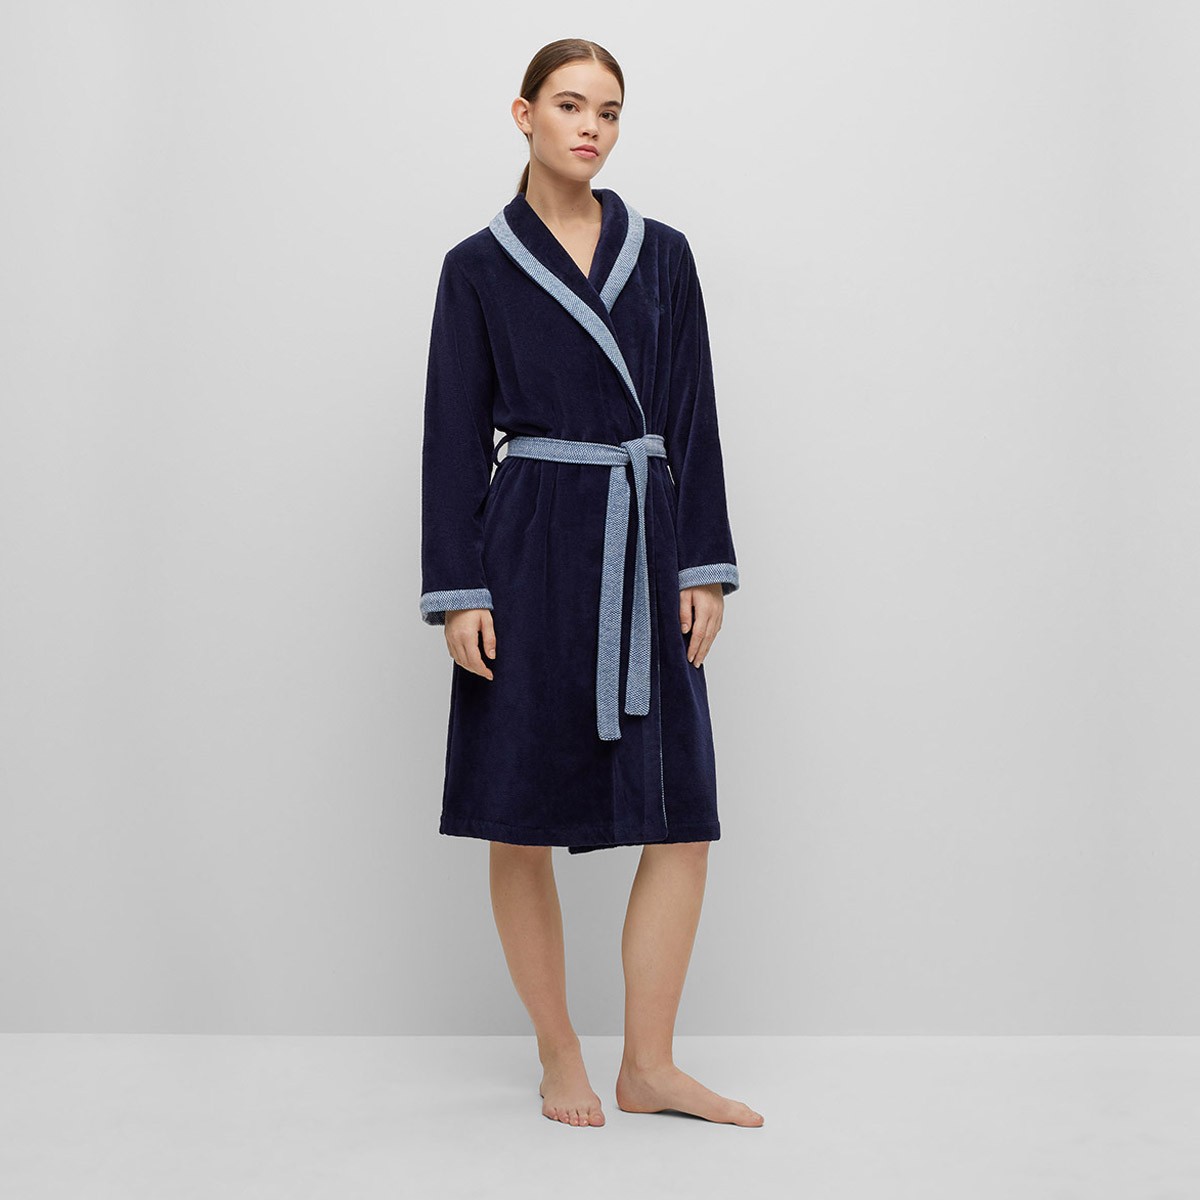 Luxury Bath Linens: Towels, Robes, & Bath Mats - Yves Delorme Online Outlet